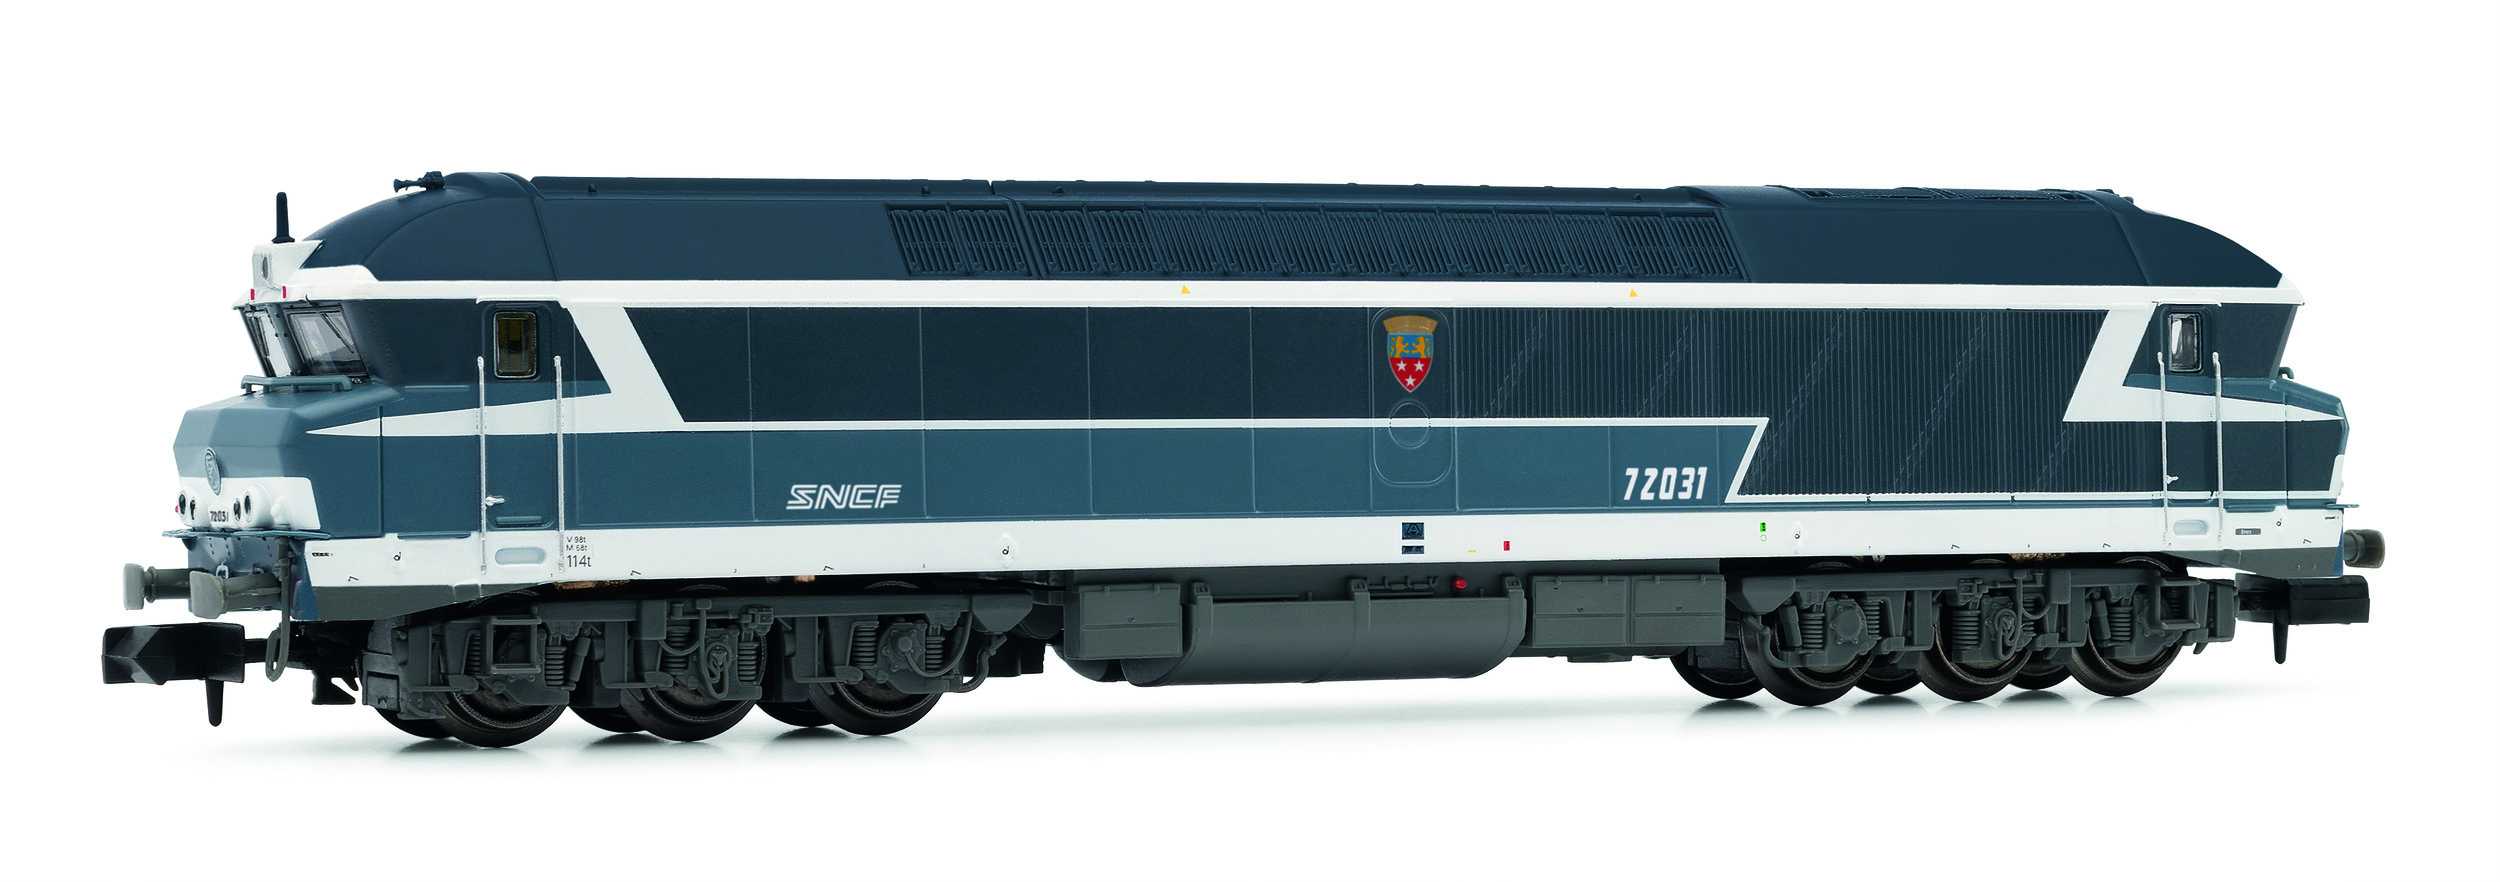 Trains miniatures : locomotives et autorail - Locomotive diesel CC 720